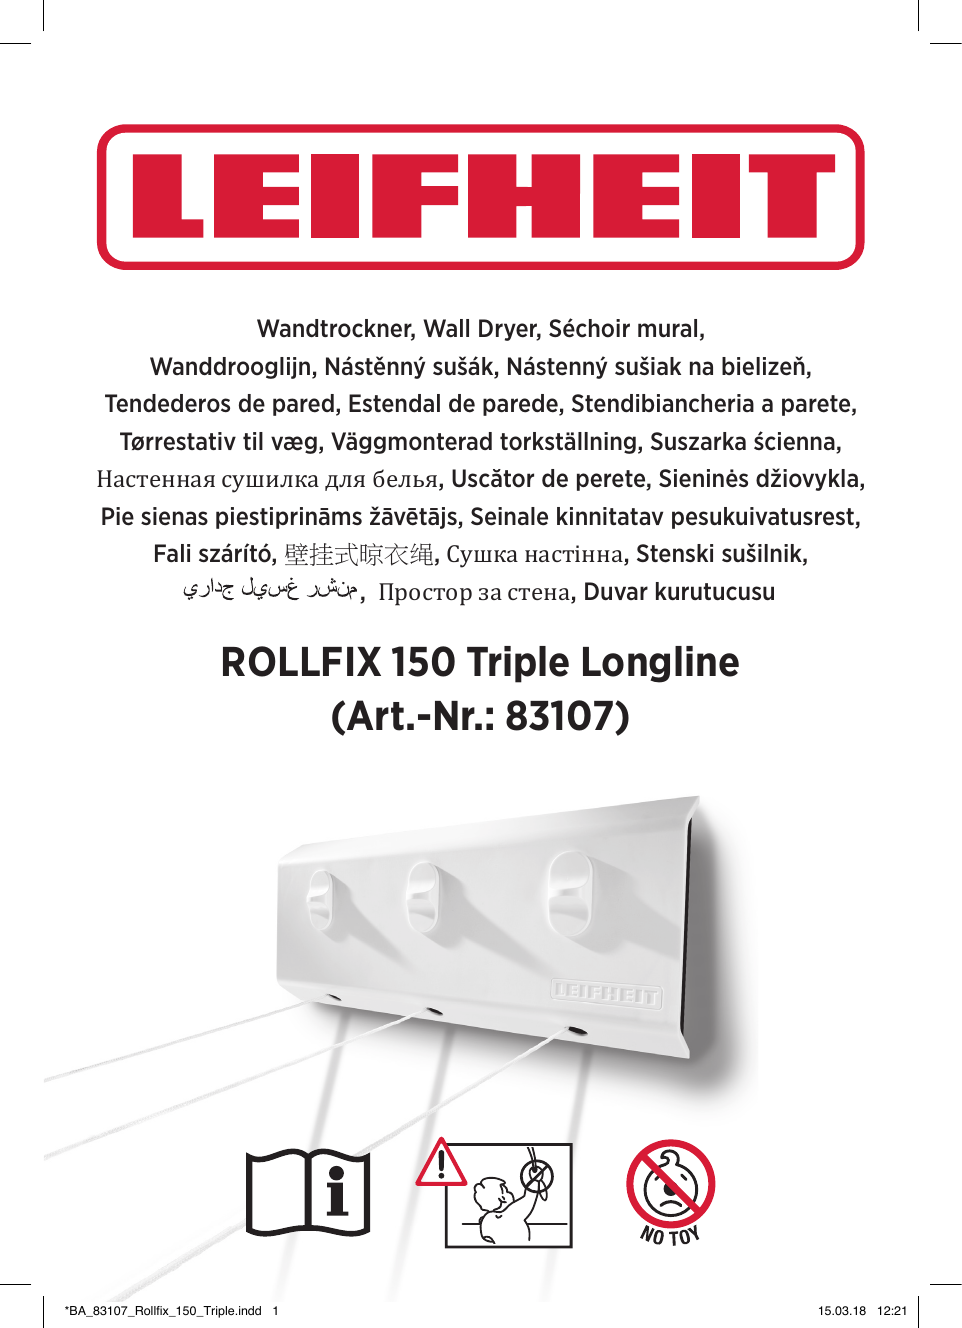 Rollfix 150 Triple Longline wall-mounted washing line